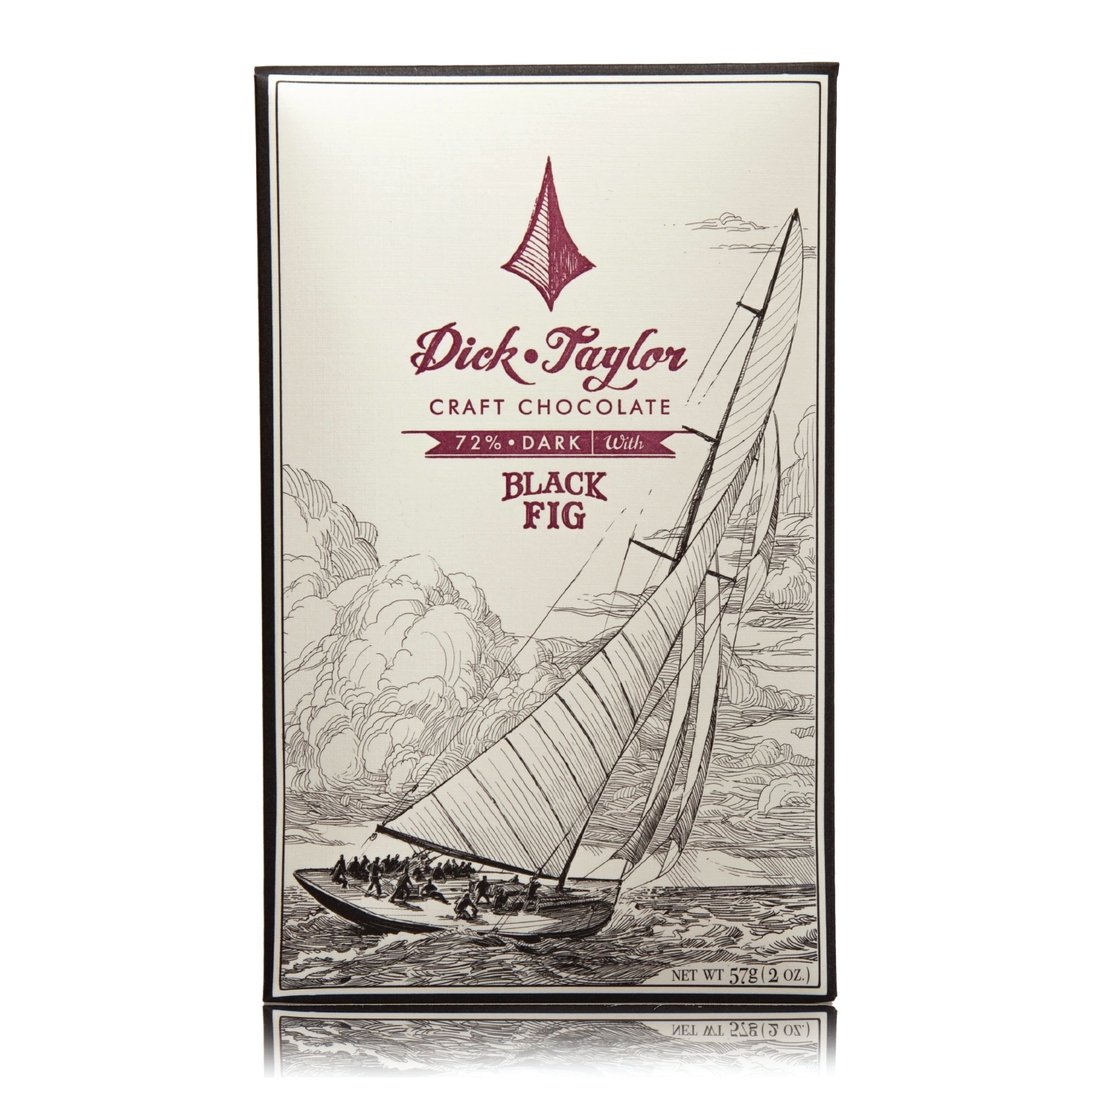 Dick Taylor Craft Chocolate - 'Black Fig' Dark Chocolate (2OZ / 72%) - The Epicurean Trader